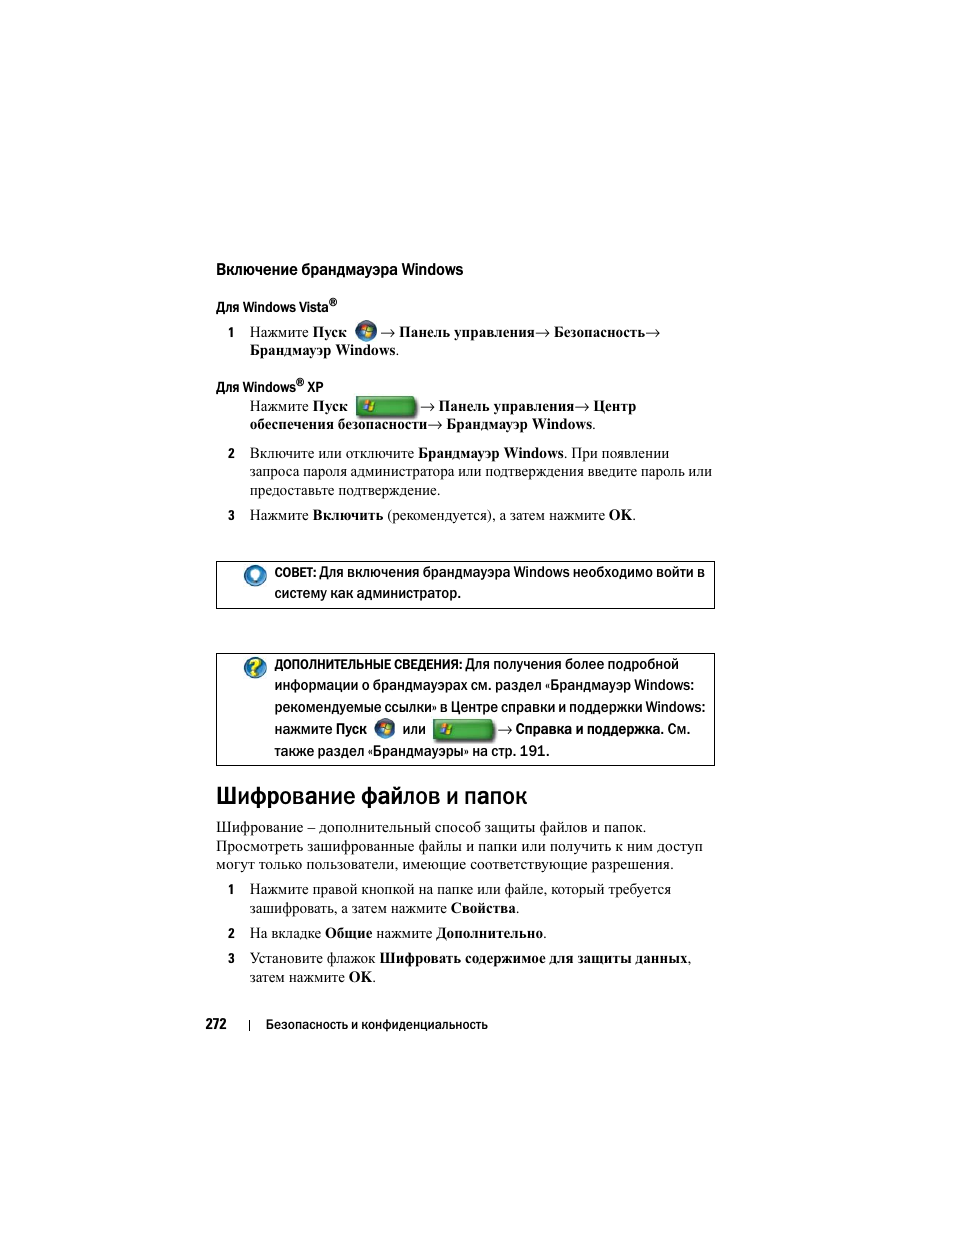 Включение брандмауэра windows, Шифрование файлов и папок | Инструкция по эксплуатации Dell Inspiron 560 | Страница 272 / 384